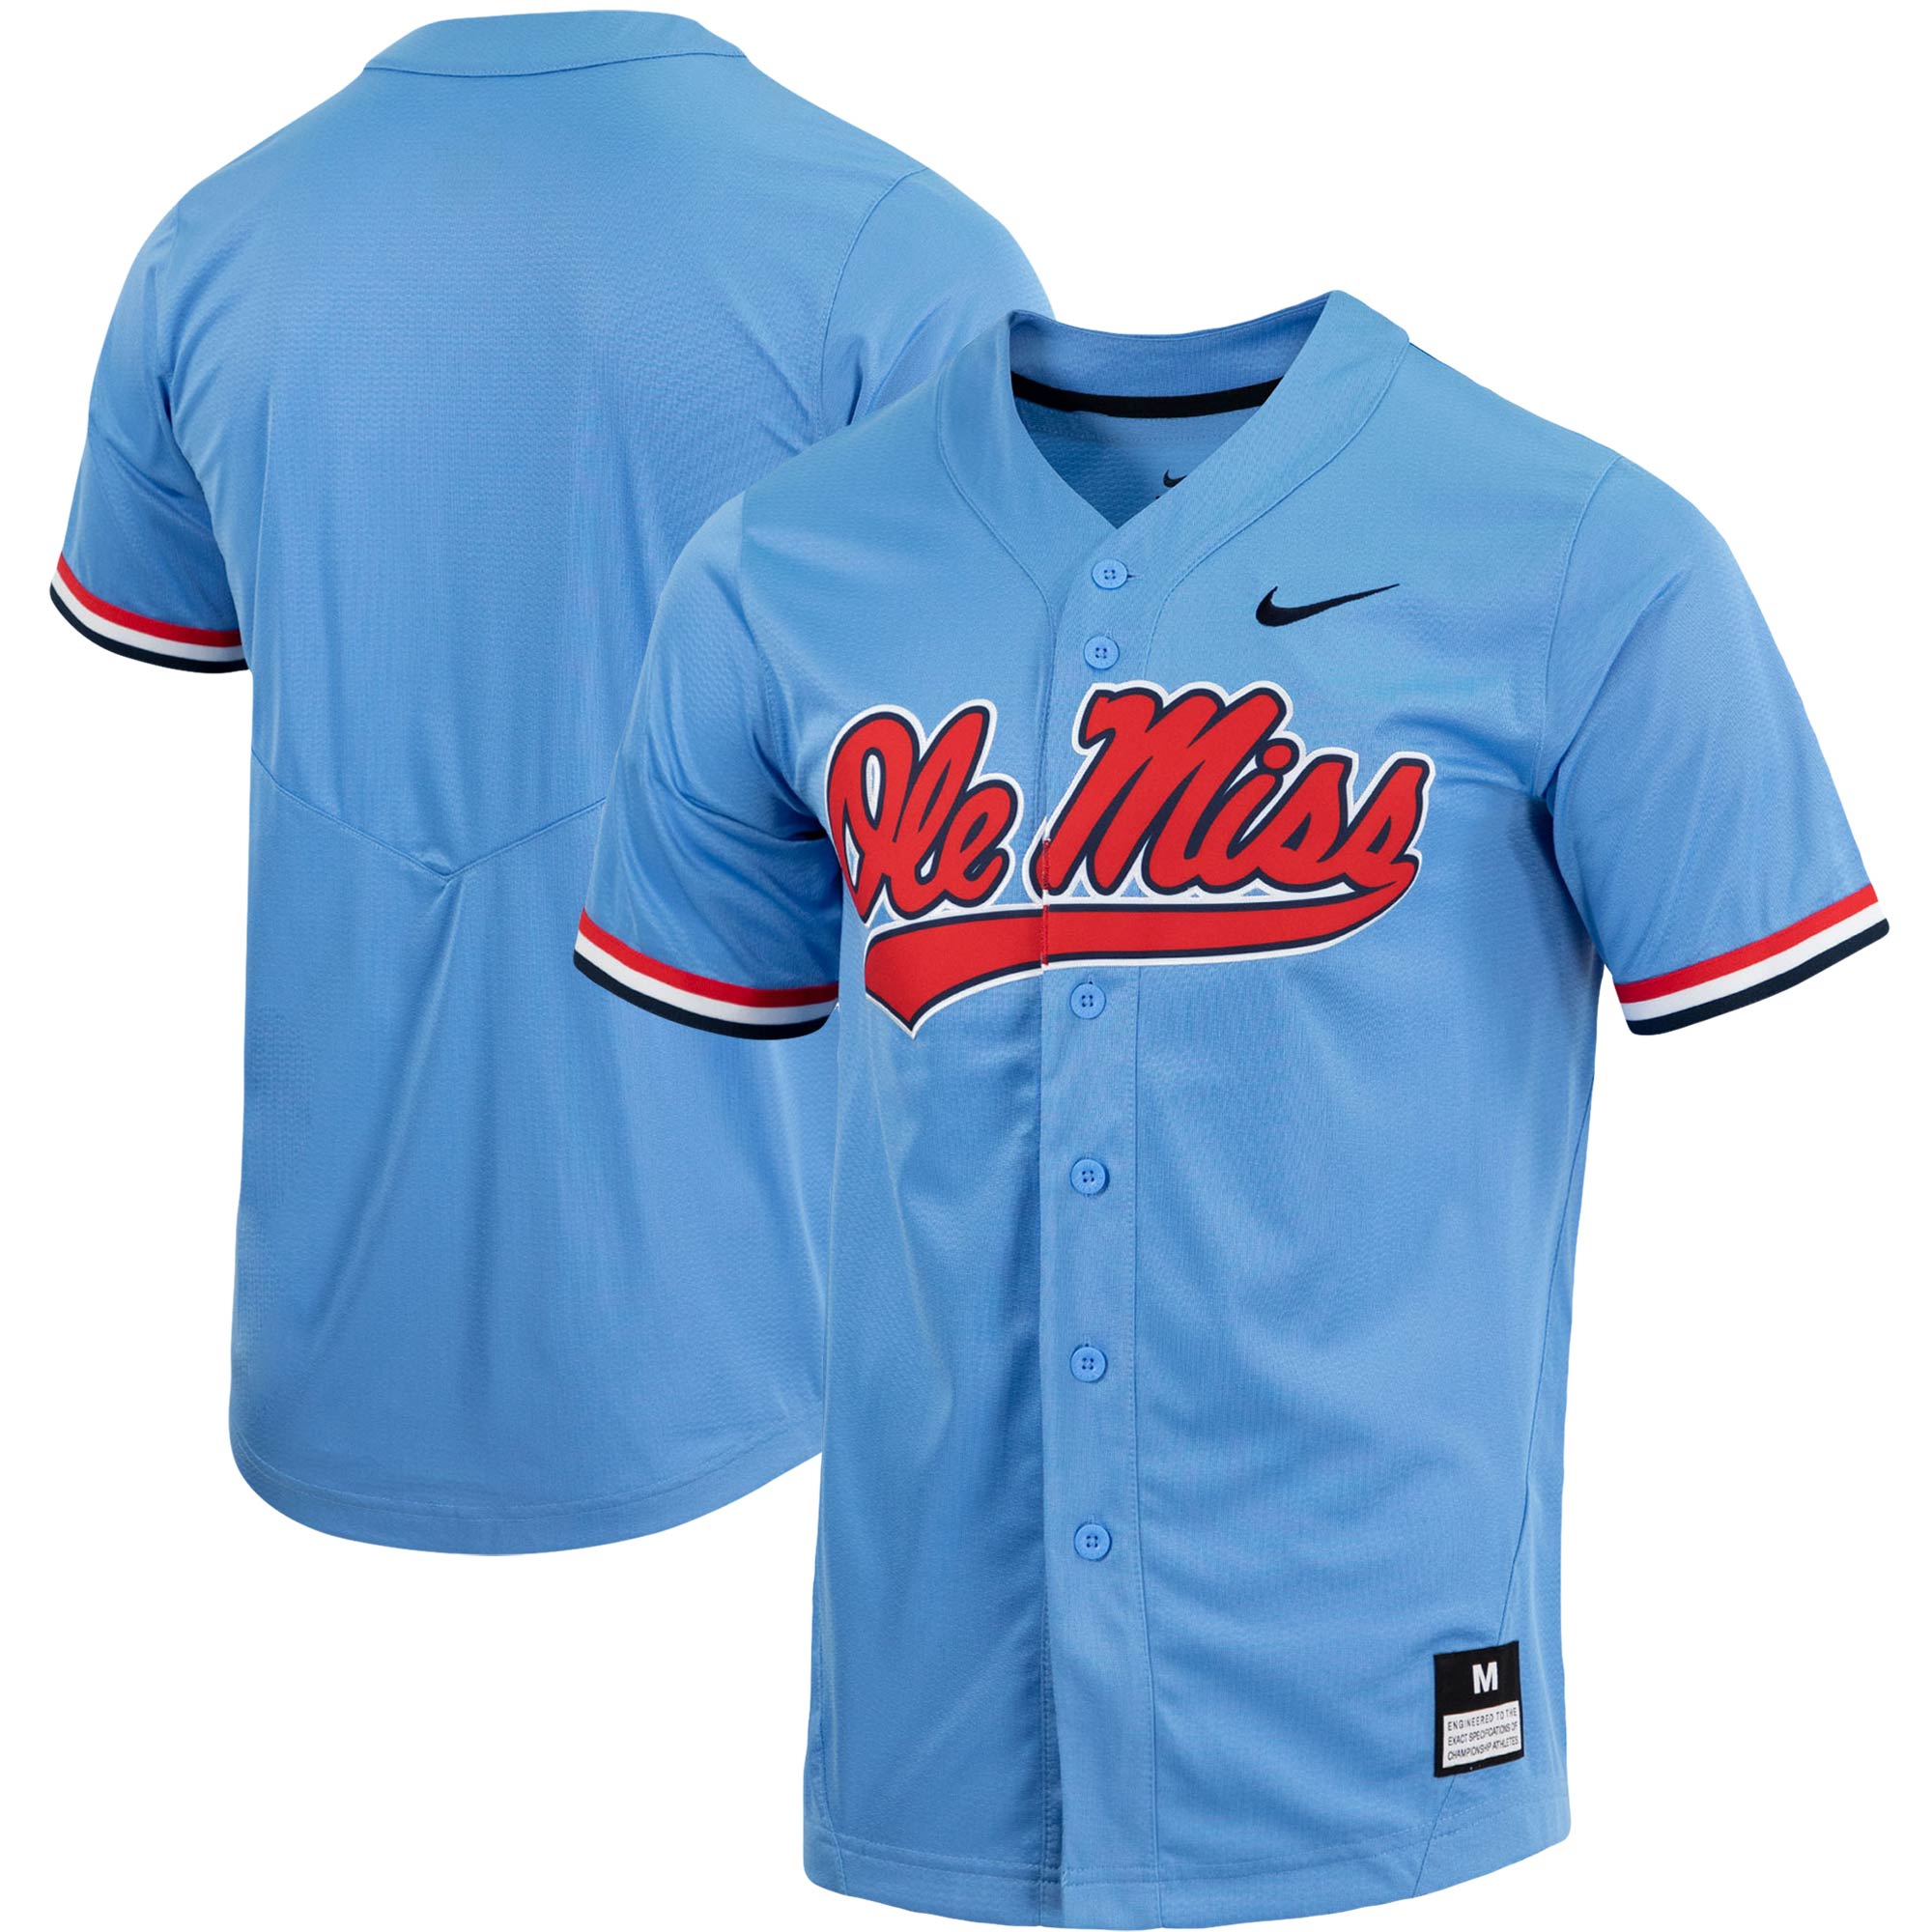 Ole Miss Rebels Replica Full-Button Baseball Jersey - Powder Blue For Youth Women Men